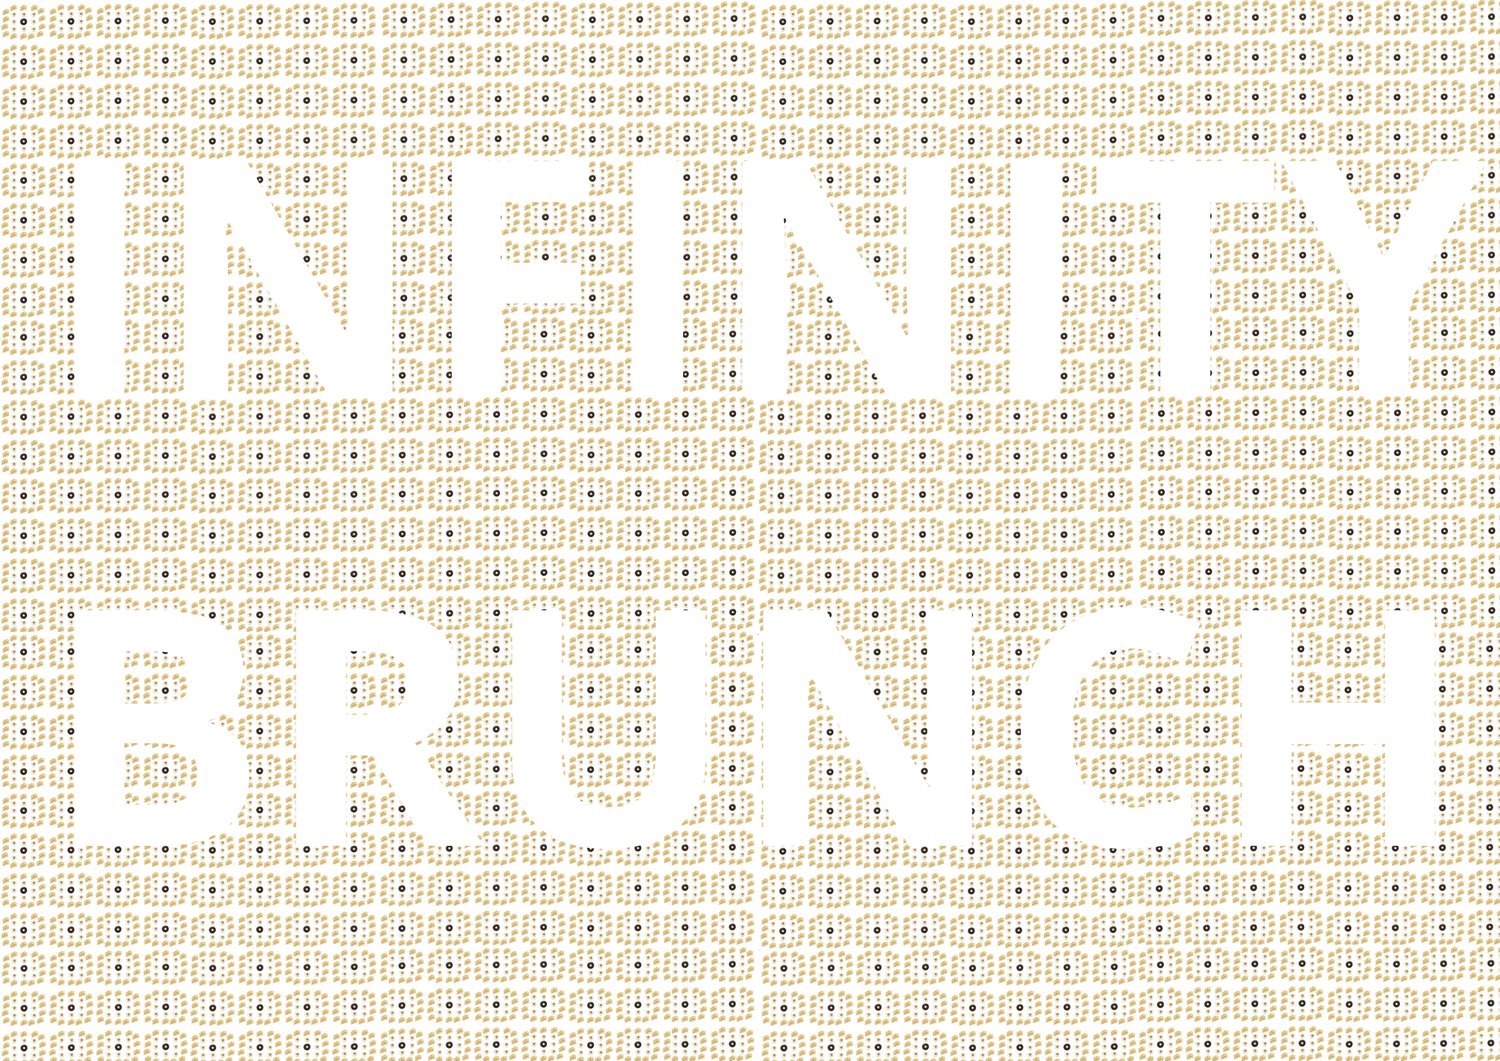 Infinity Brunch Poster